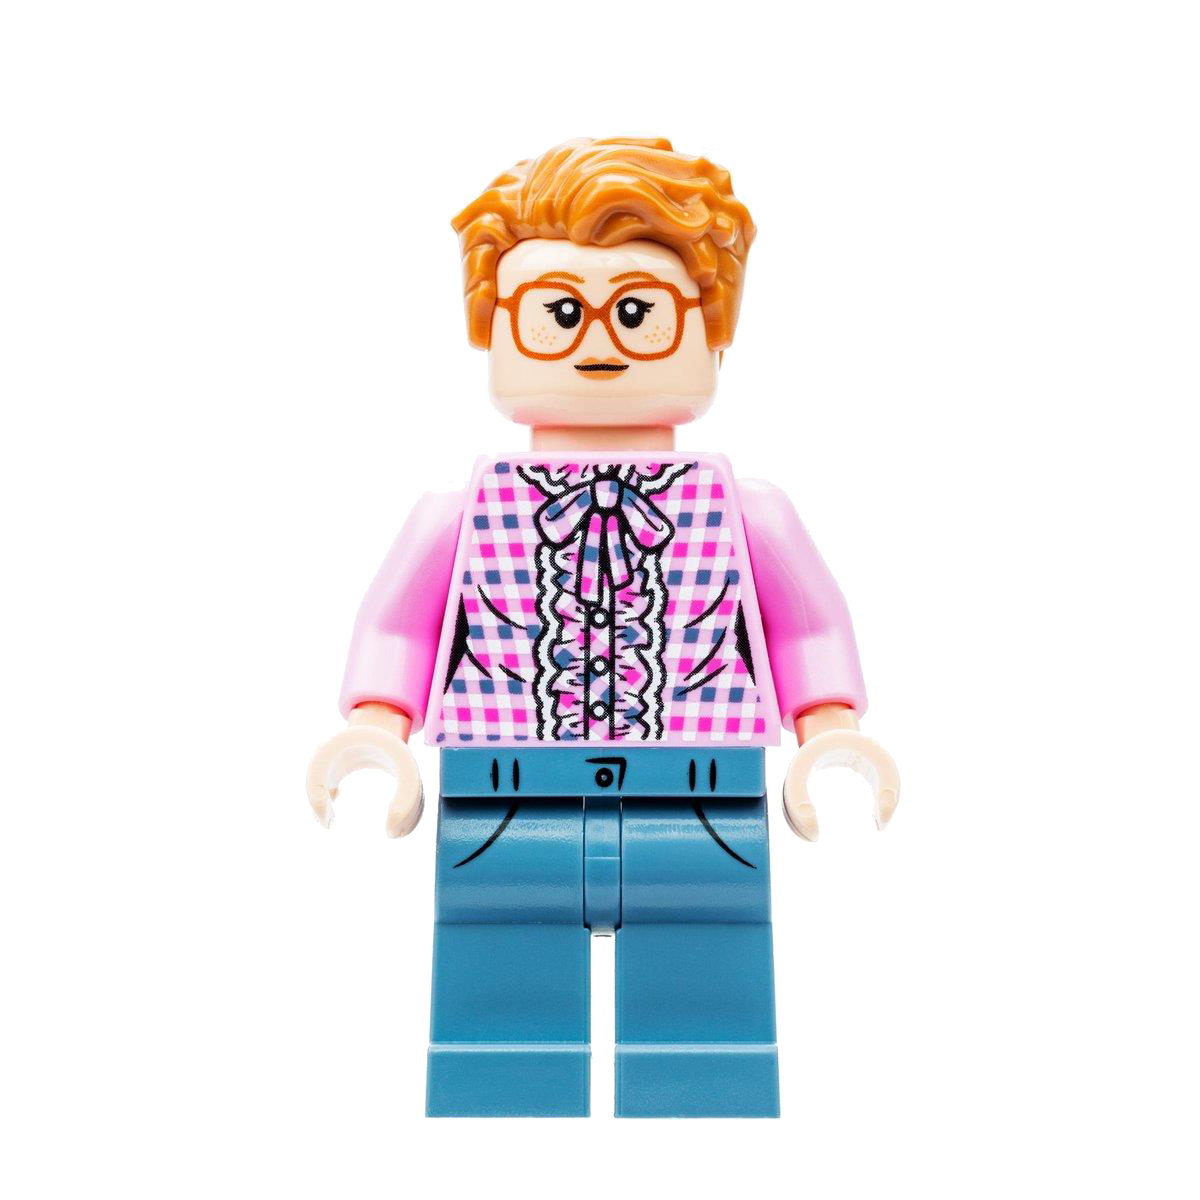 Lego Barb. : r/StrangerThings